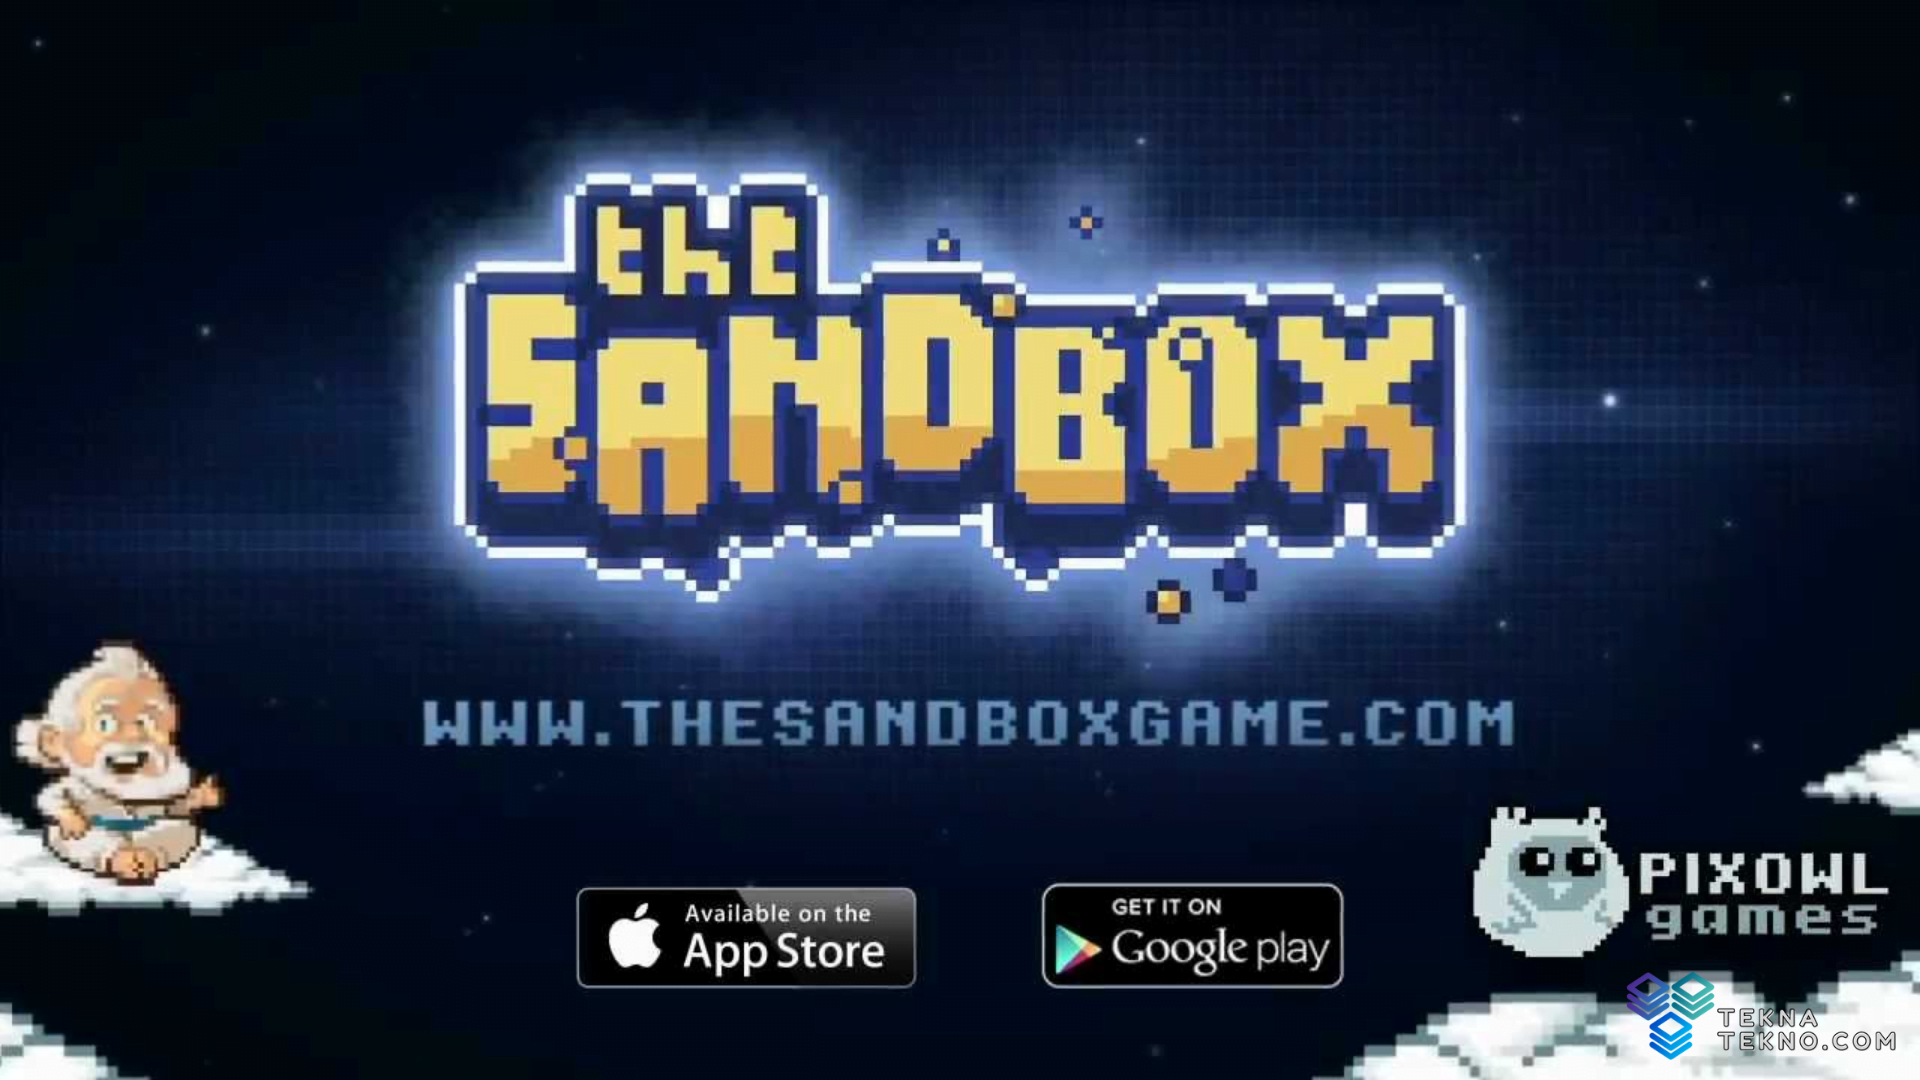 The Sandbox Game Mendefinisikan Ulang Permainan Kripto